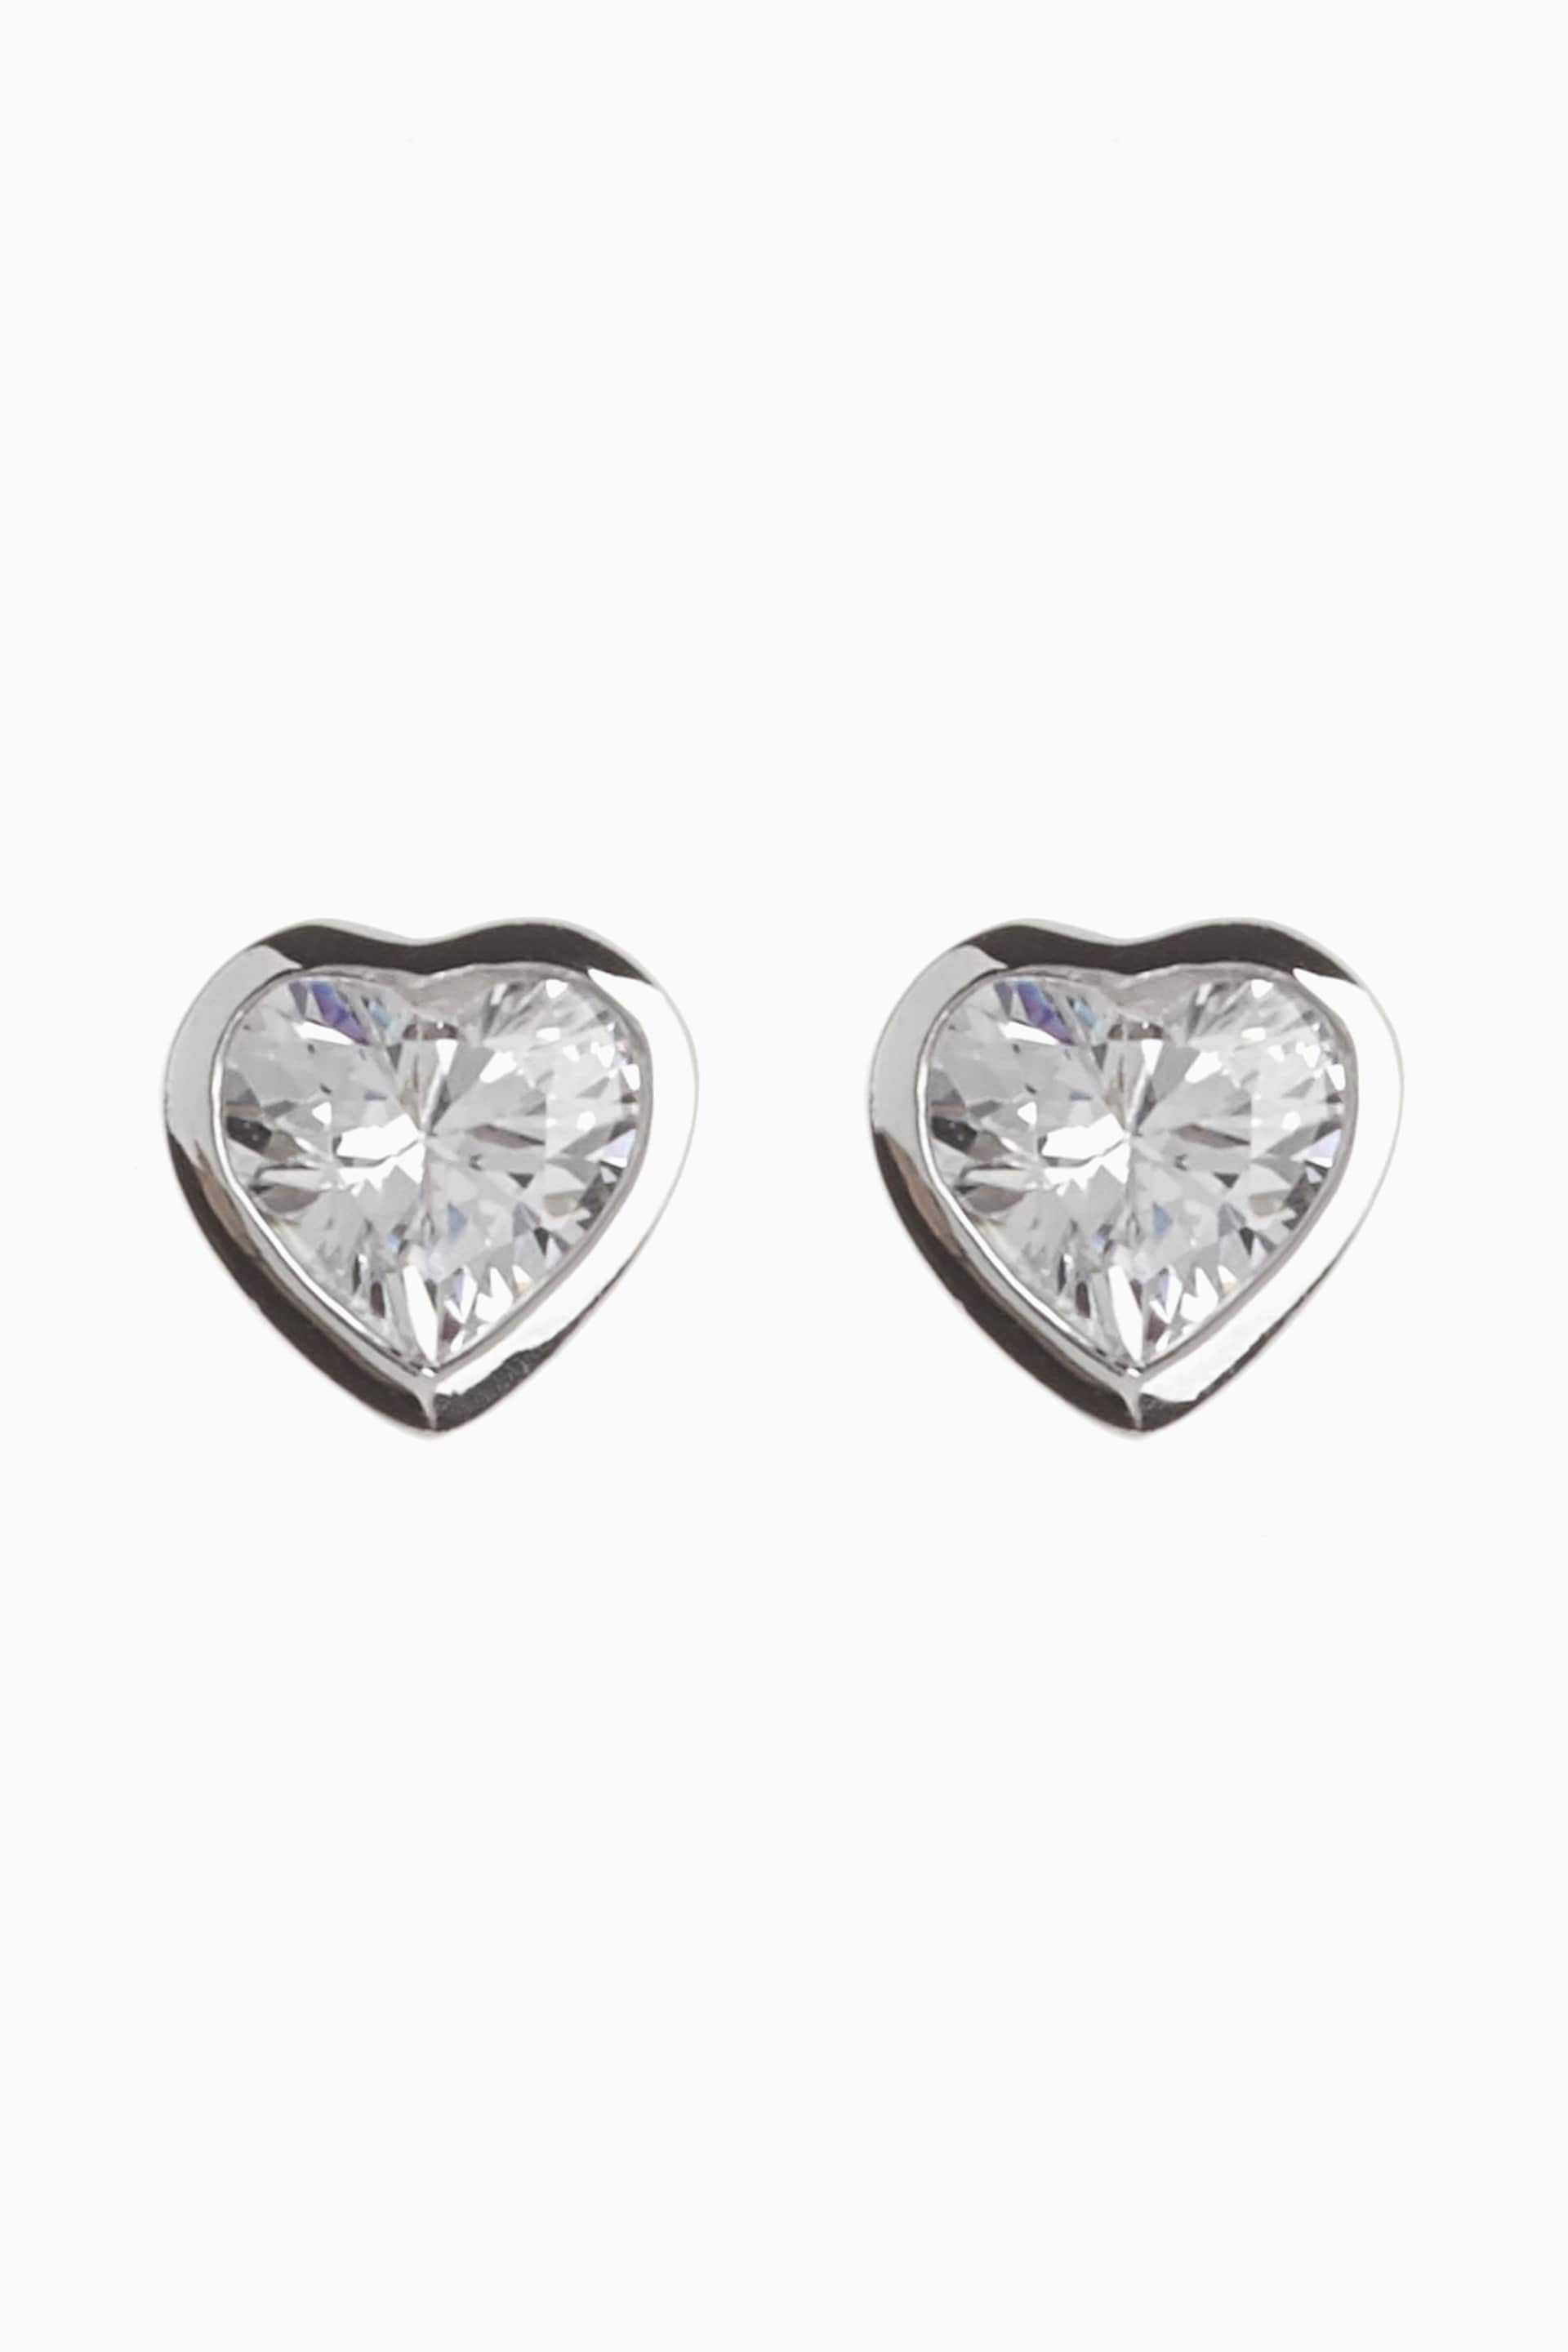 Sterling Silver Delicate Heart Stud Earrings - Image 2 of 3